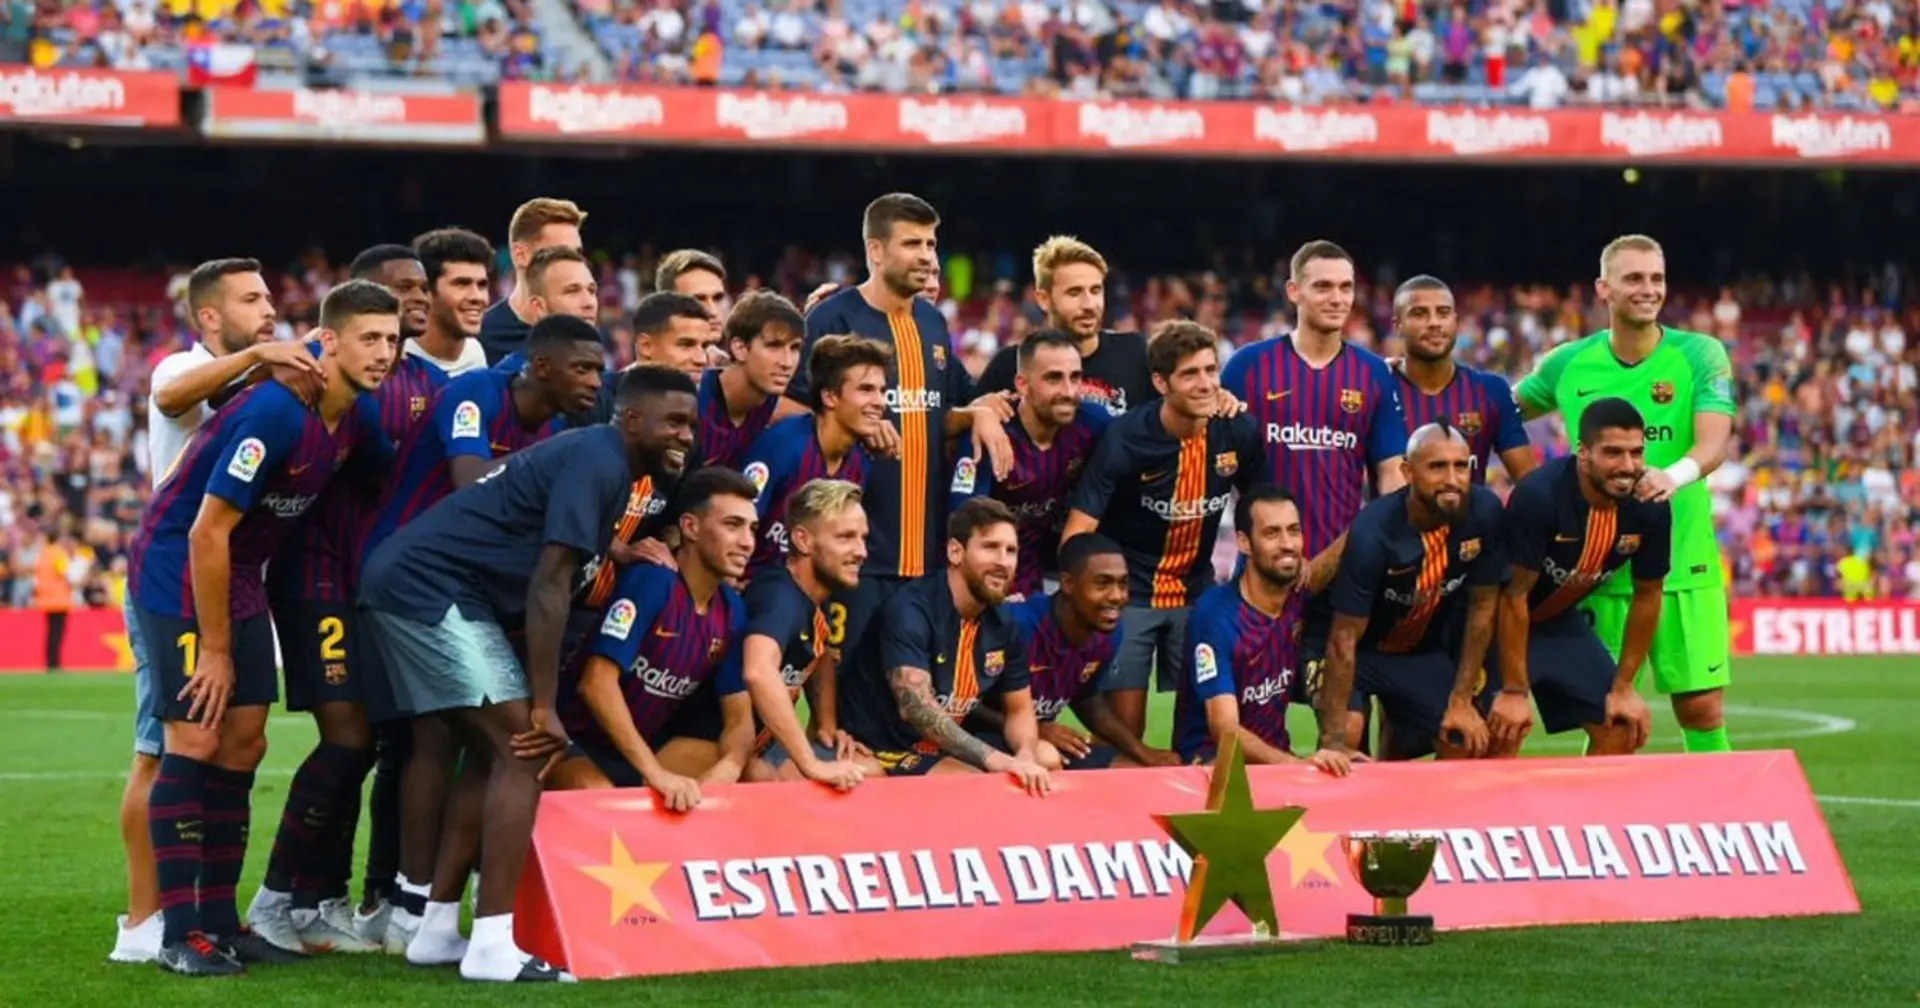 OFFICIAL: Barcelona will face Elche in 2020 Joan Gamper Trophy